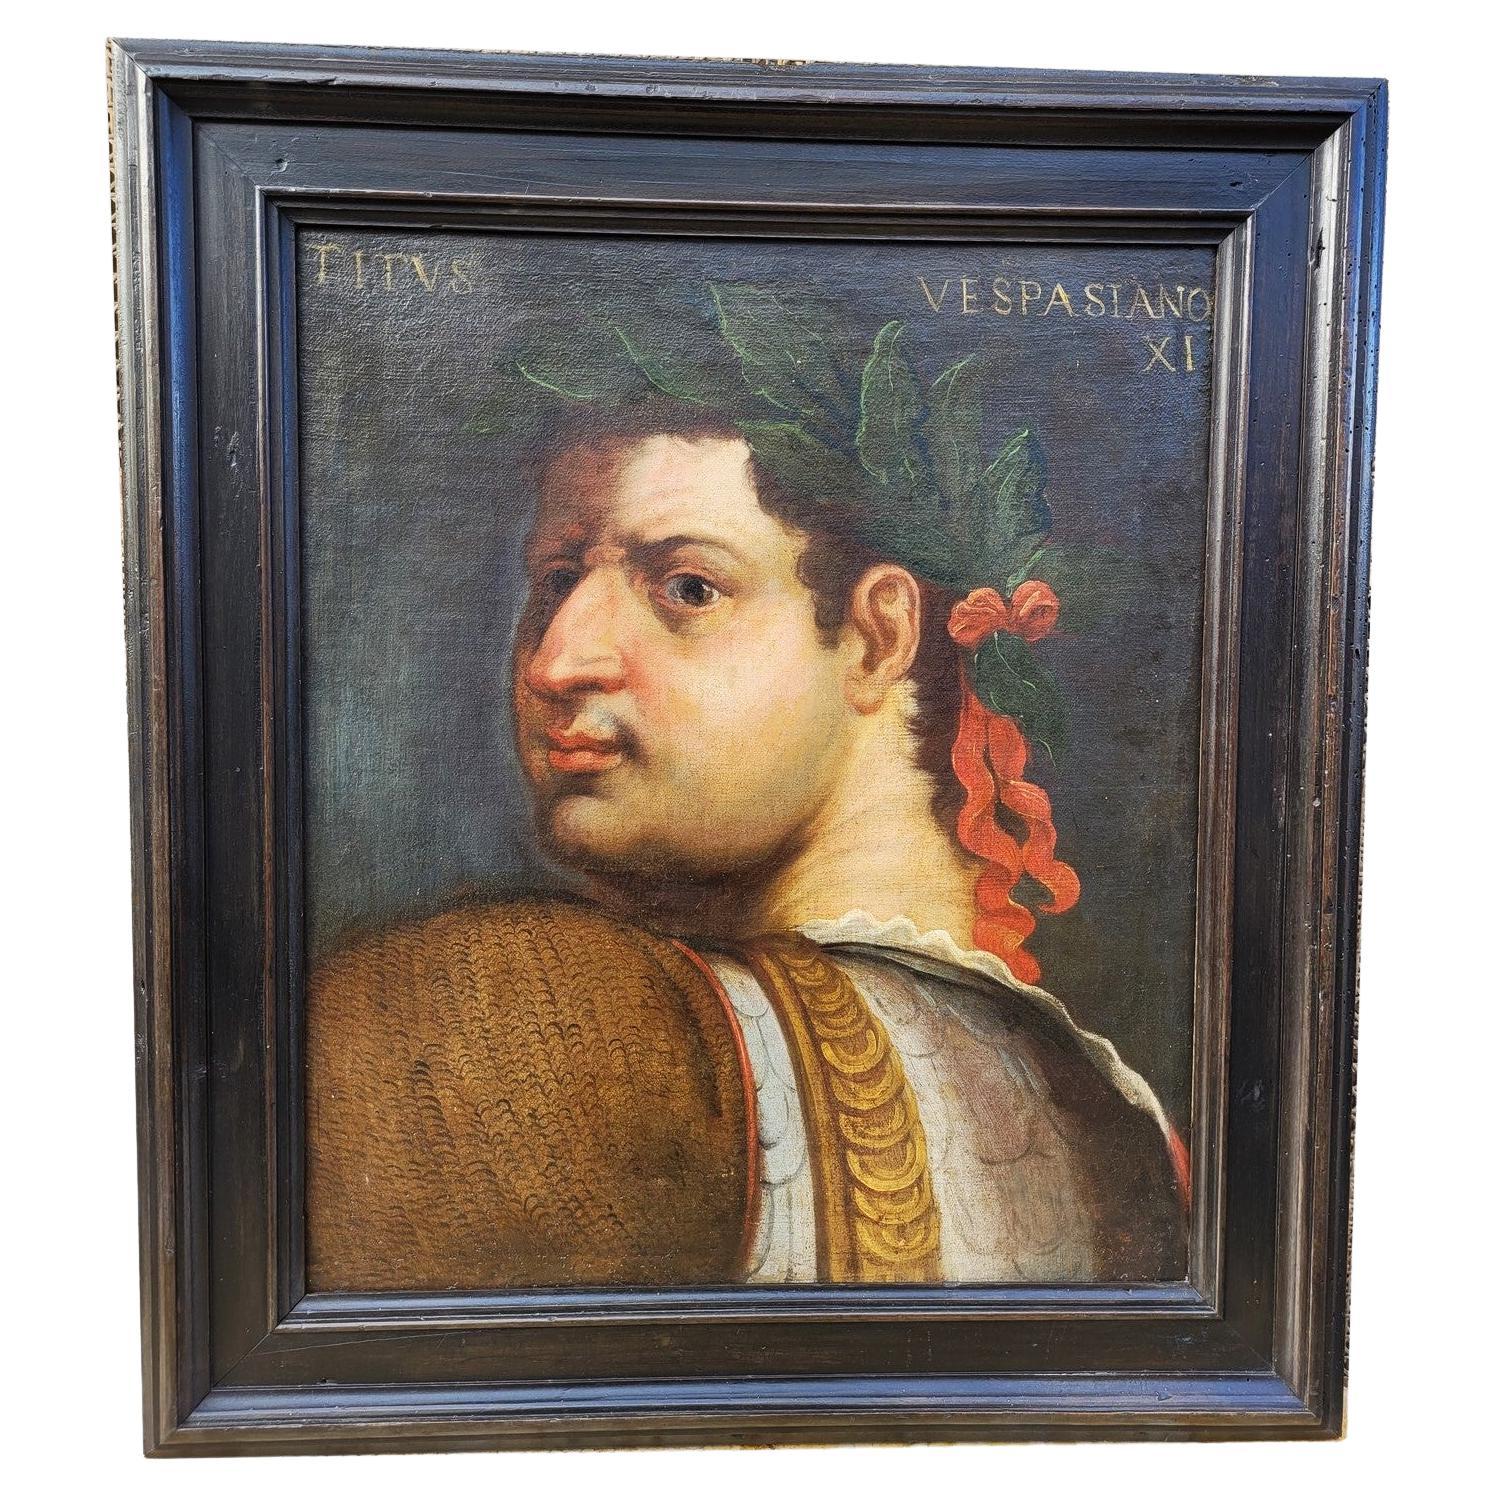 Titus Vespasian, Framed Portrait, 17th Century